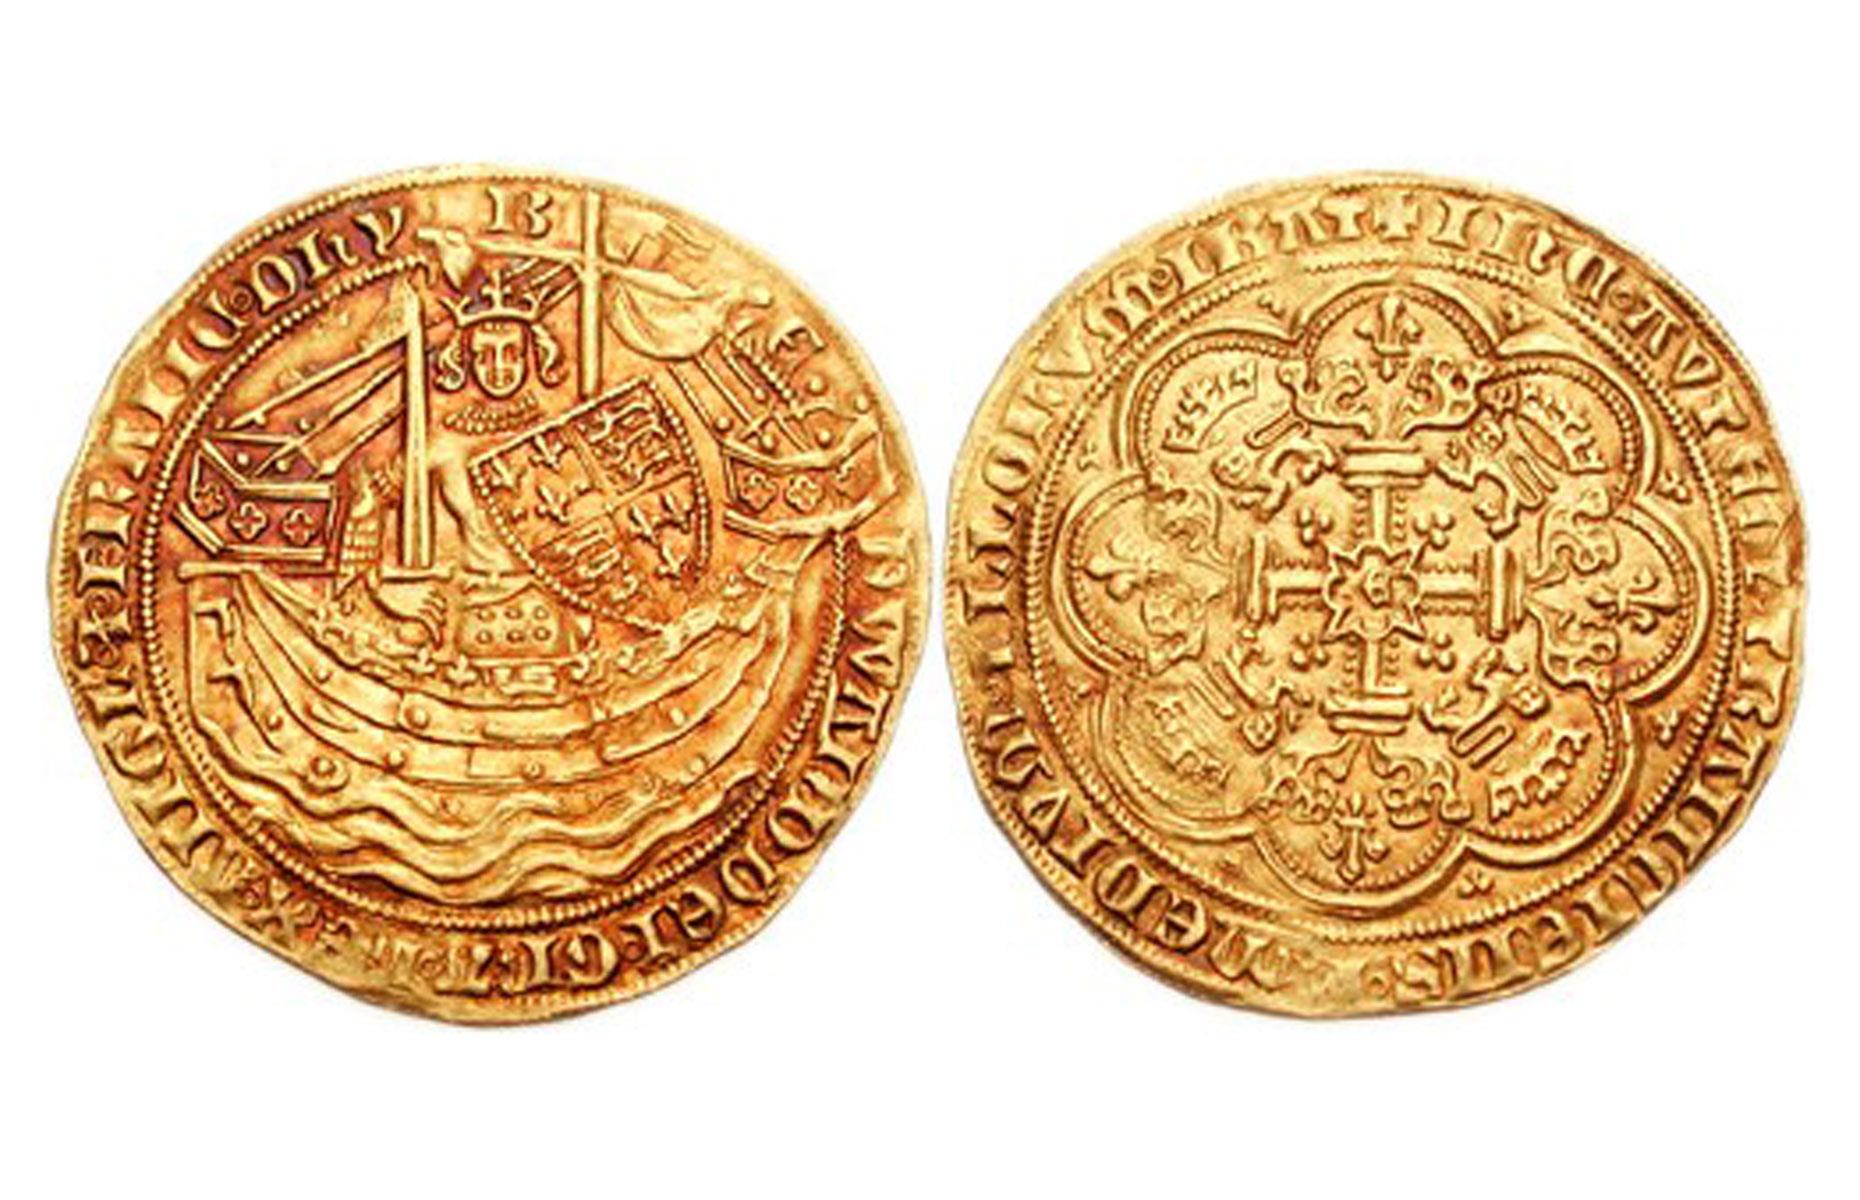 First gold coin